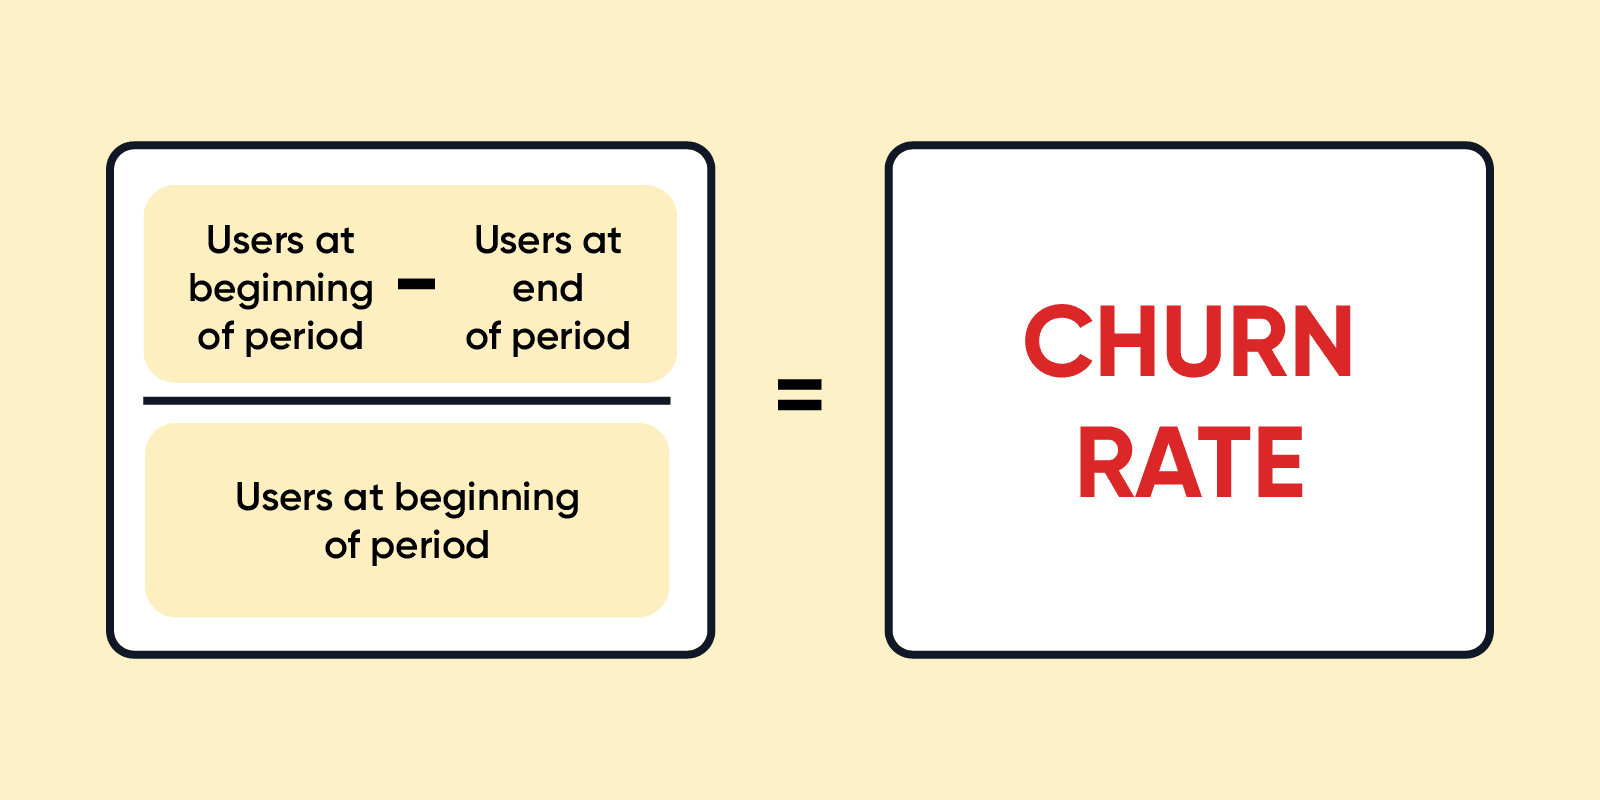 A formula for calculating customer churn